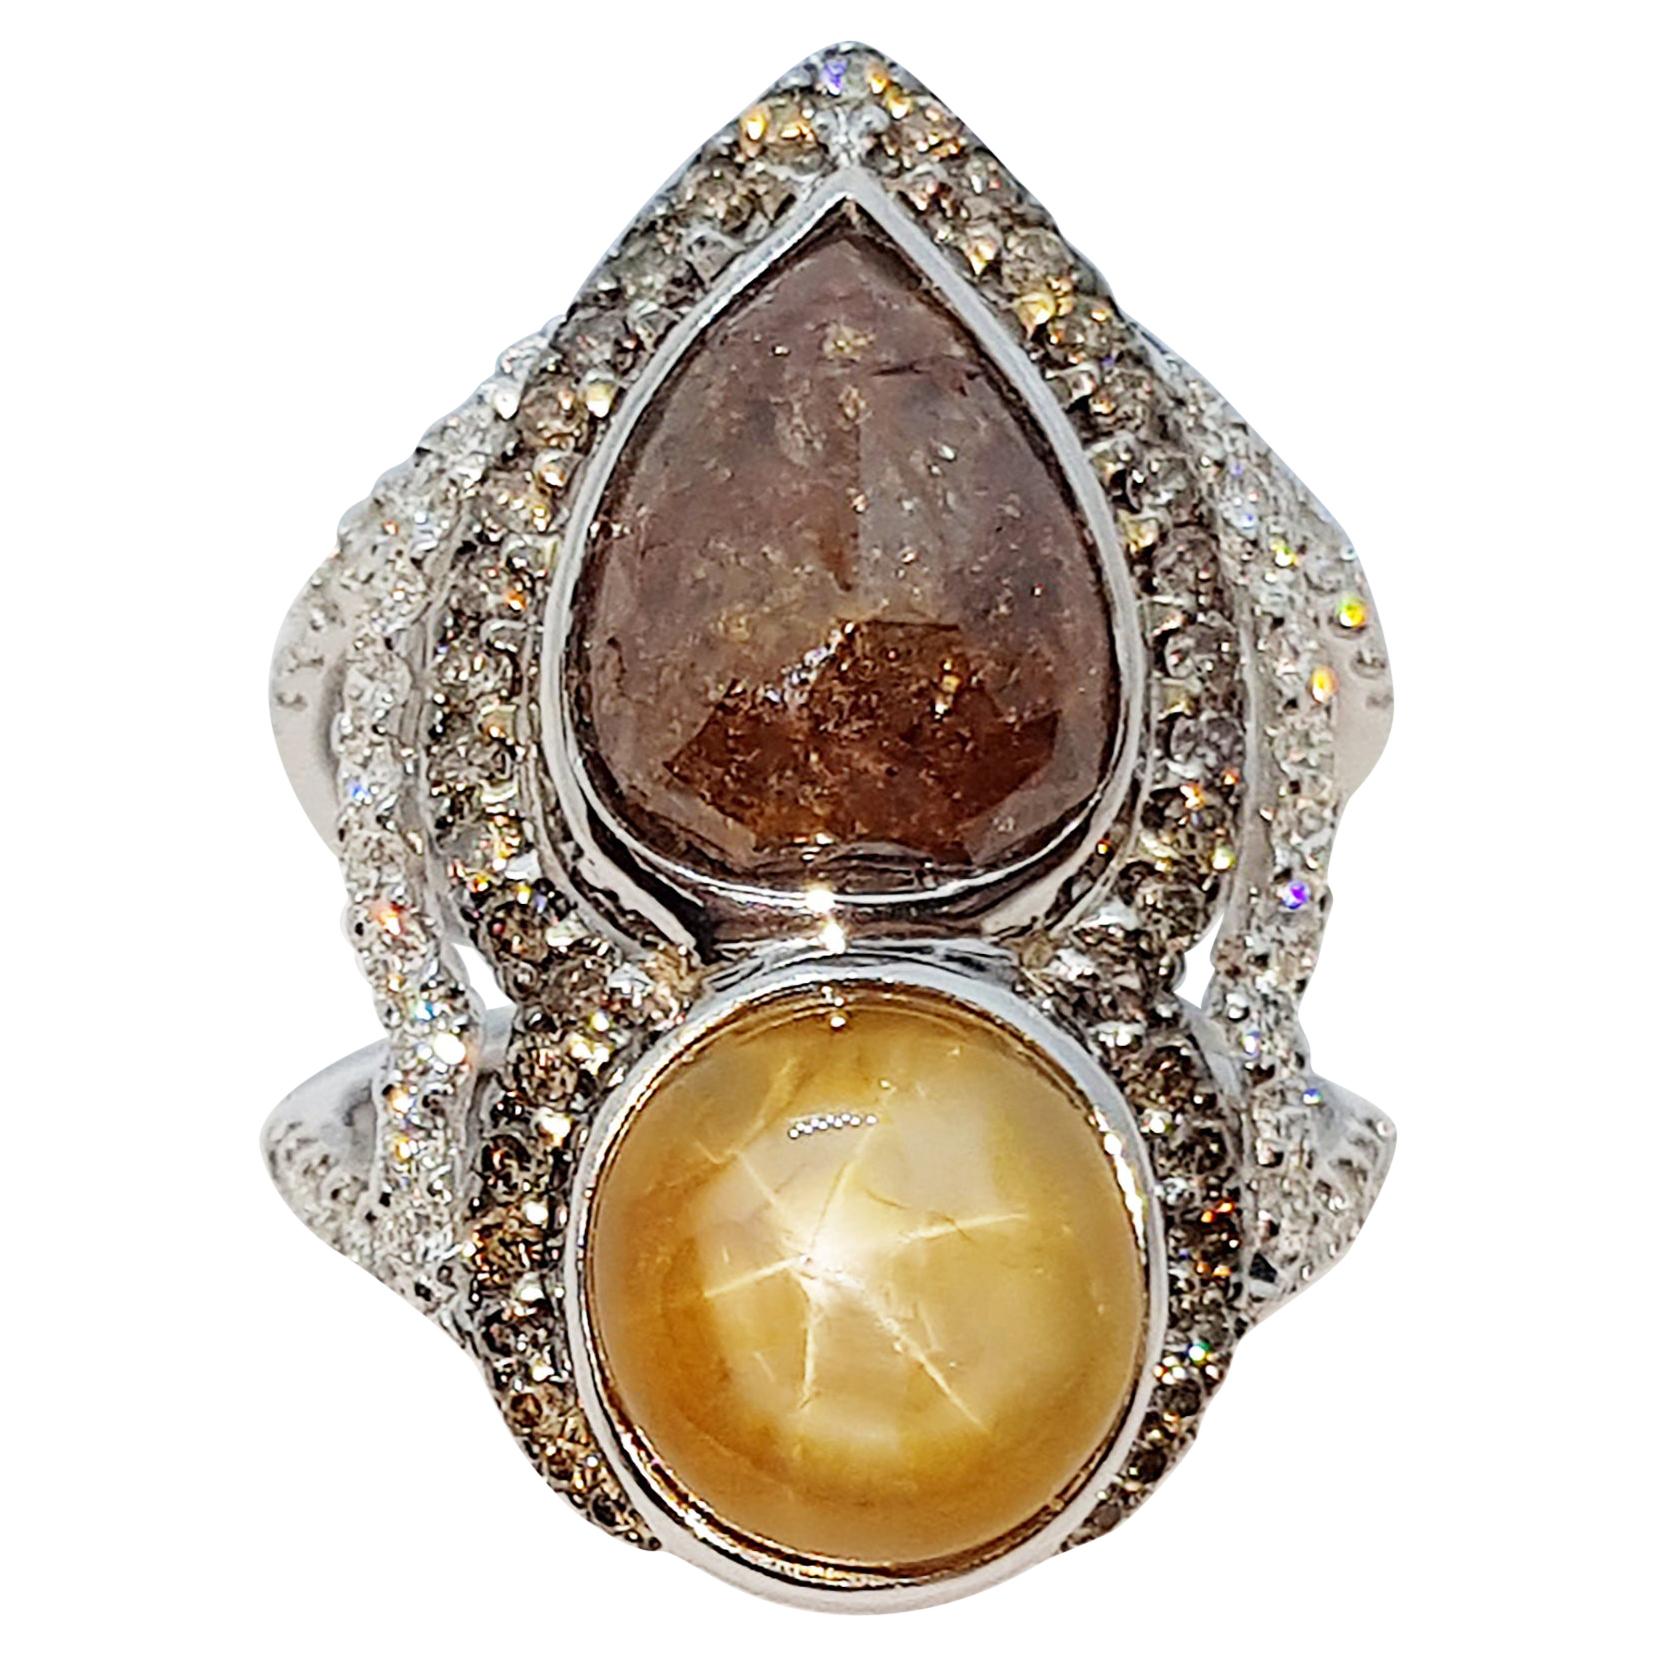 Rough Diamond, Yellow Star Sapphire and Diamond Ring Set in 18 Karat White Gold 